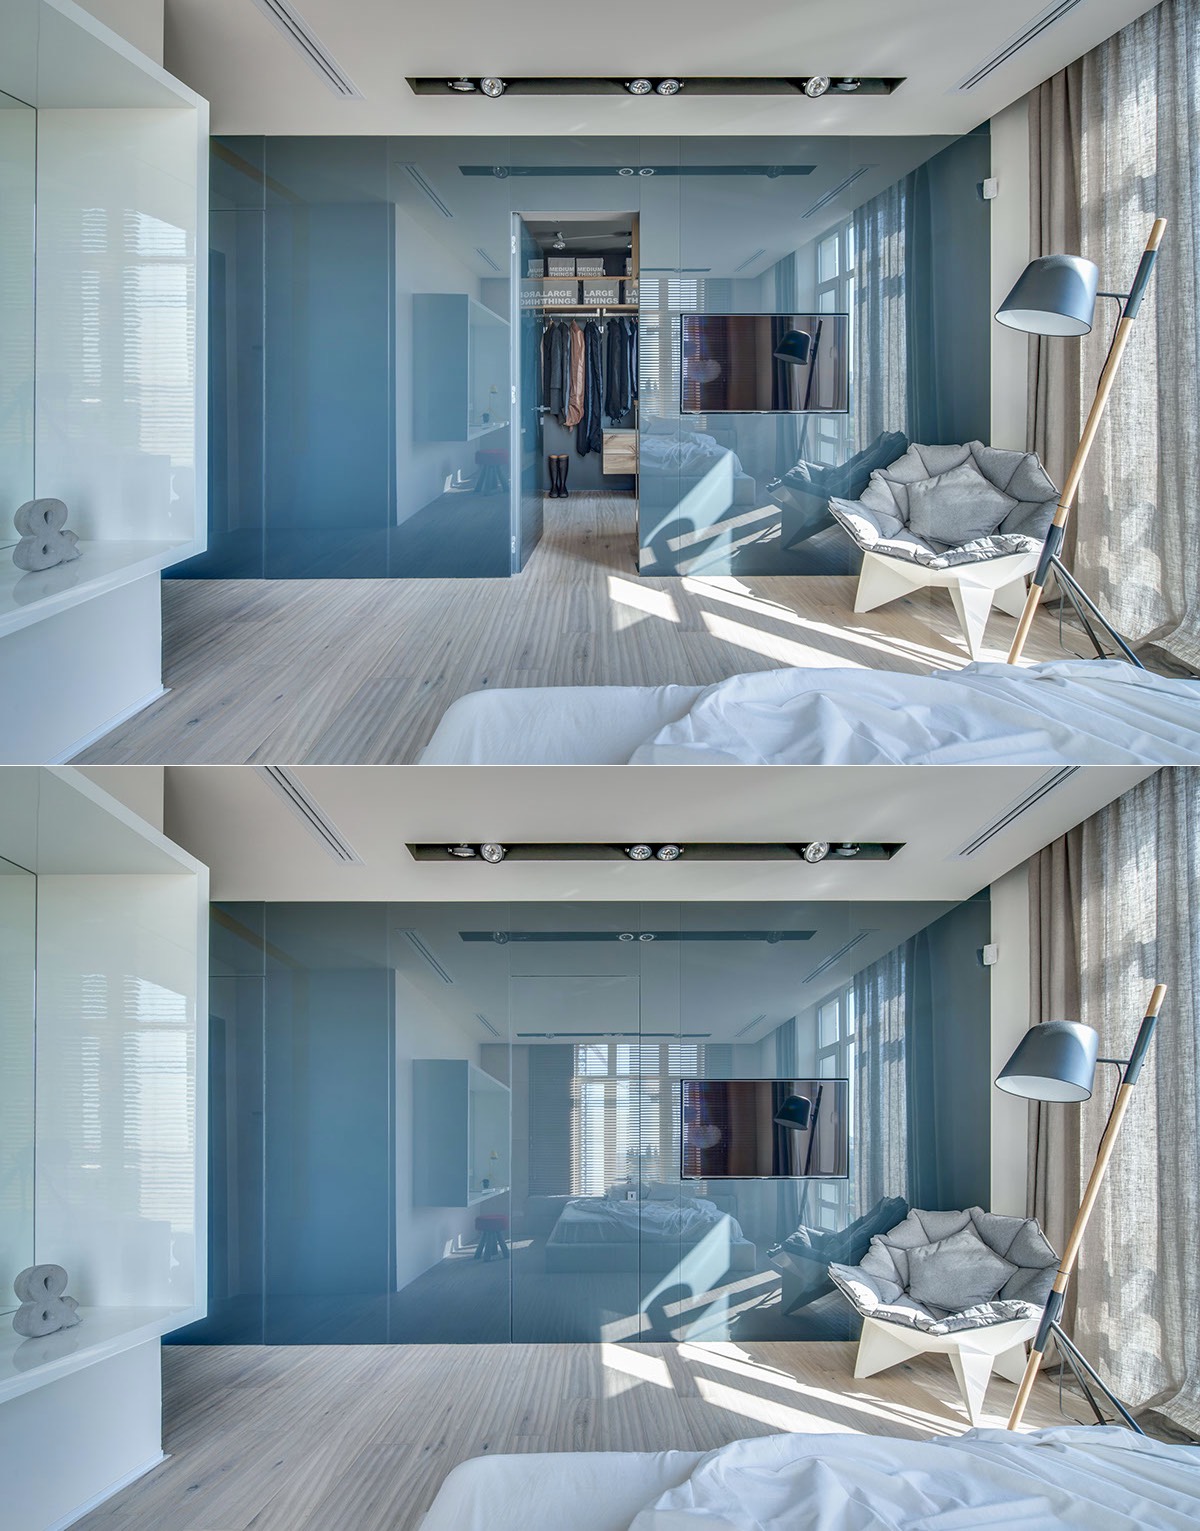 Stylish makeover of the bedroom "width =" 1200 "height =" 1531 "srcset =" https://mileray.com/wp-content/uploads/2020/05/1588511485_785_15-Luxury-Bedroom-Design-With-Elegant-Wardrobe.jpg 1200w , https://mileray.com/wp-content/uploads/2016/04/stylish-wardrobe-with-transparent-doors-1-235x300.jpg 235w, https://mileray.com/wp-content/uploads/ 2016 /04/stylish-wardrobe-with-transparent-doors-1-768x980.jpg 768w, https://mileray.com/wp-content/uploads/2016/04/stylish-wardrobe-with-transparent-doors-1 - 803x1024.jpg 803w, https://mileray.com/wp-content/uploads/2016/04/stylish-wardrobe-with-transparent-doors-1-696x888.jpg 696w, https://mileray.com/wp - content / uploads / 2016/04 / stylish-cloakroom-with-transparent-doors-1-1068x1363.jpg 1068w, https://mileray.com/wp-content/uploads/2016/04/stylish-wardrobe-with- transparent -doors-1-329x420.jpg 329w "sizes =" (maximum width: 1200px) 100vw, 1200px